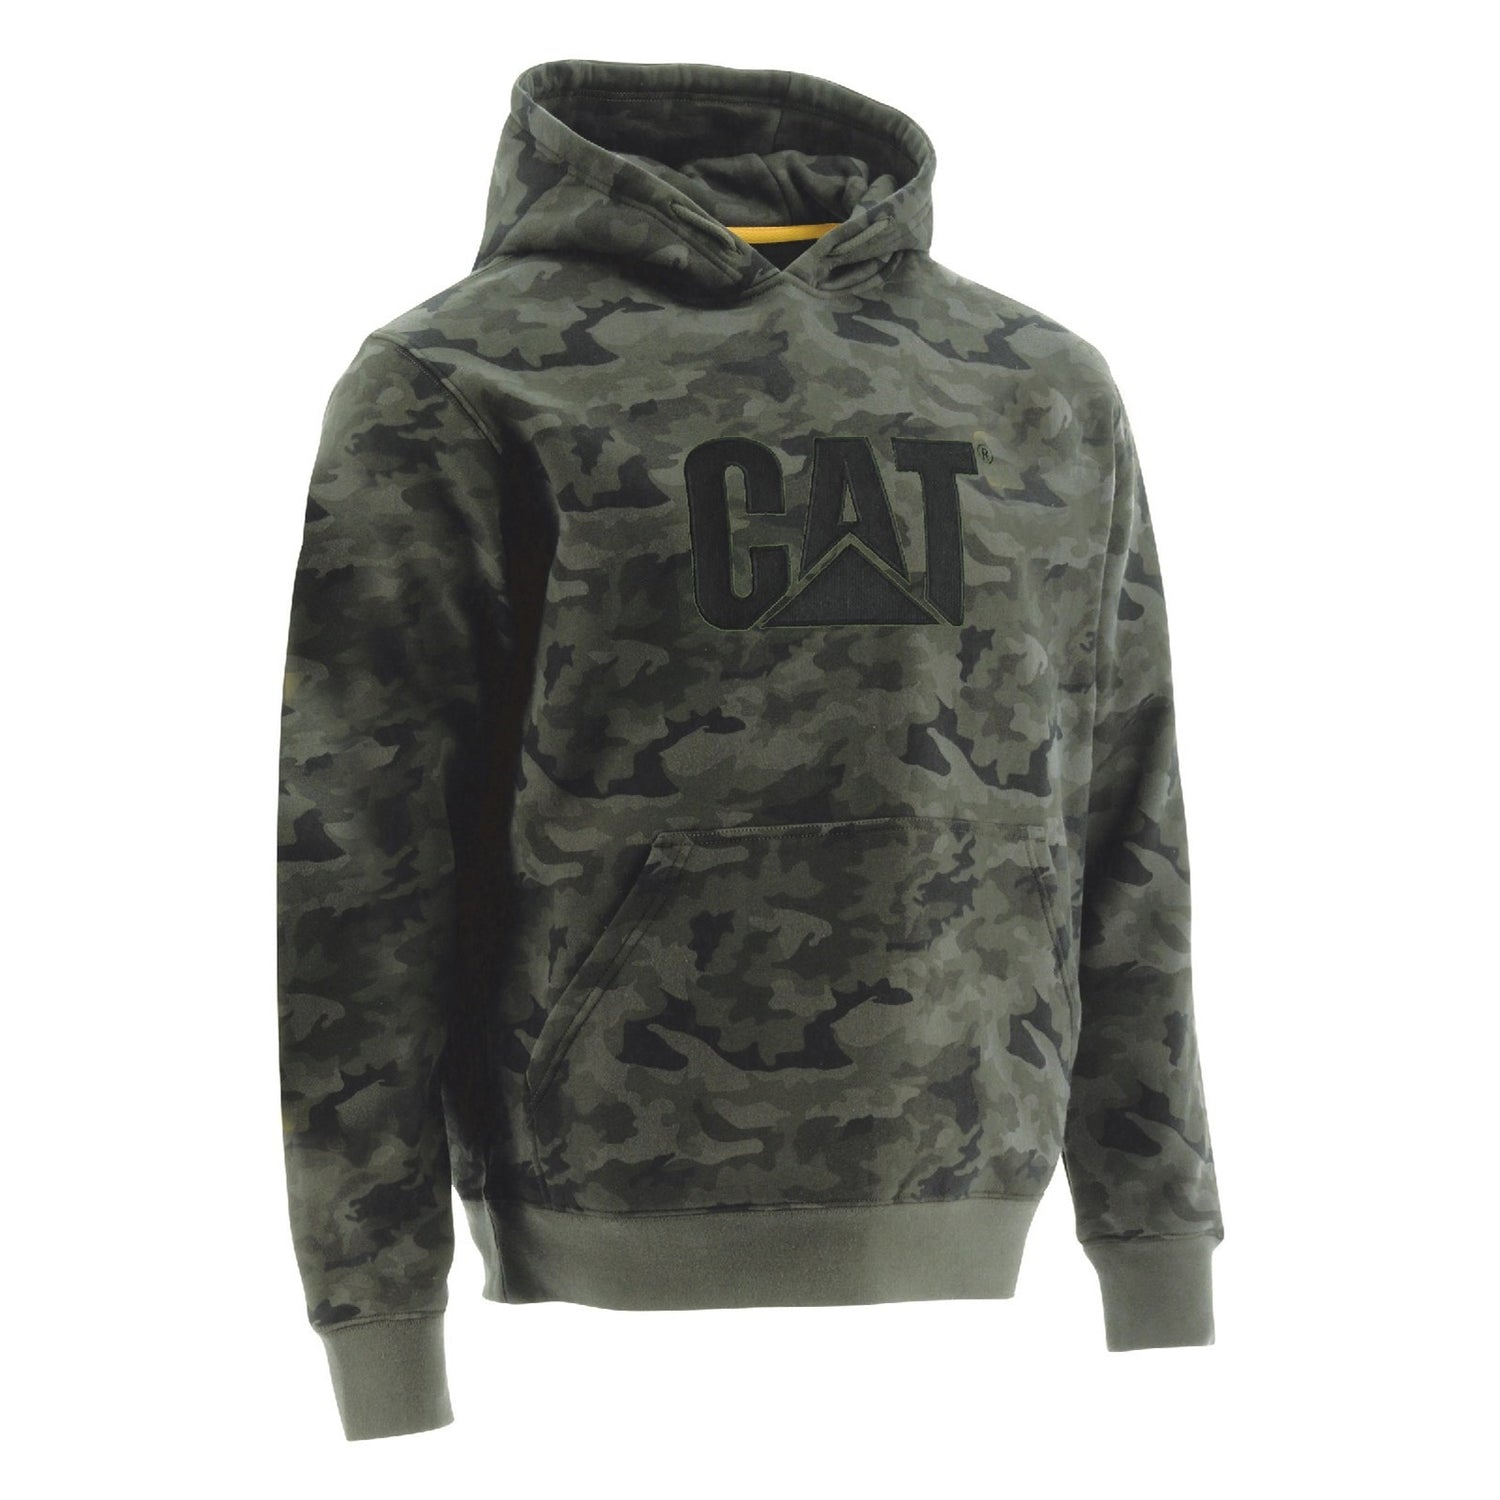 Caterpillar Trademark Hooded Sweatshirt in Night Camo